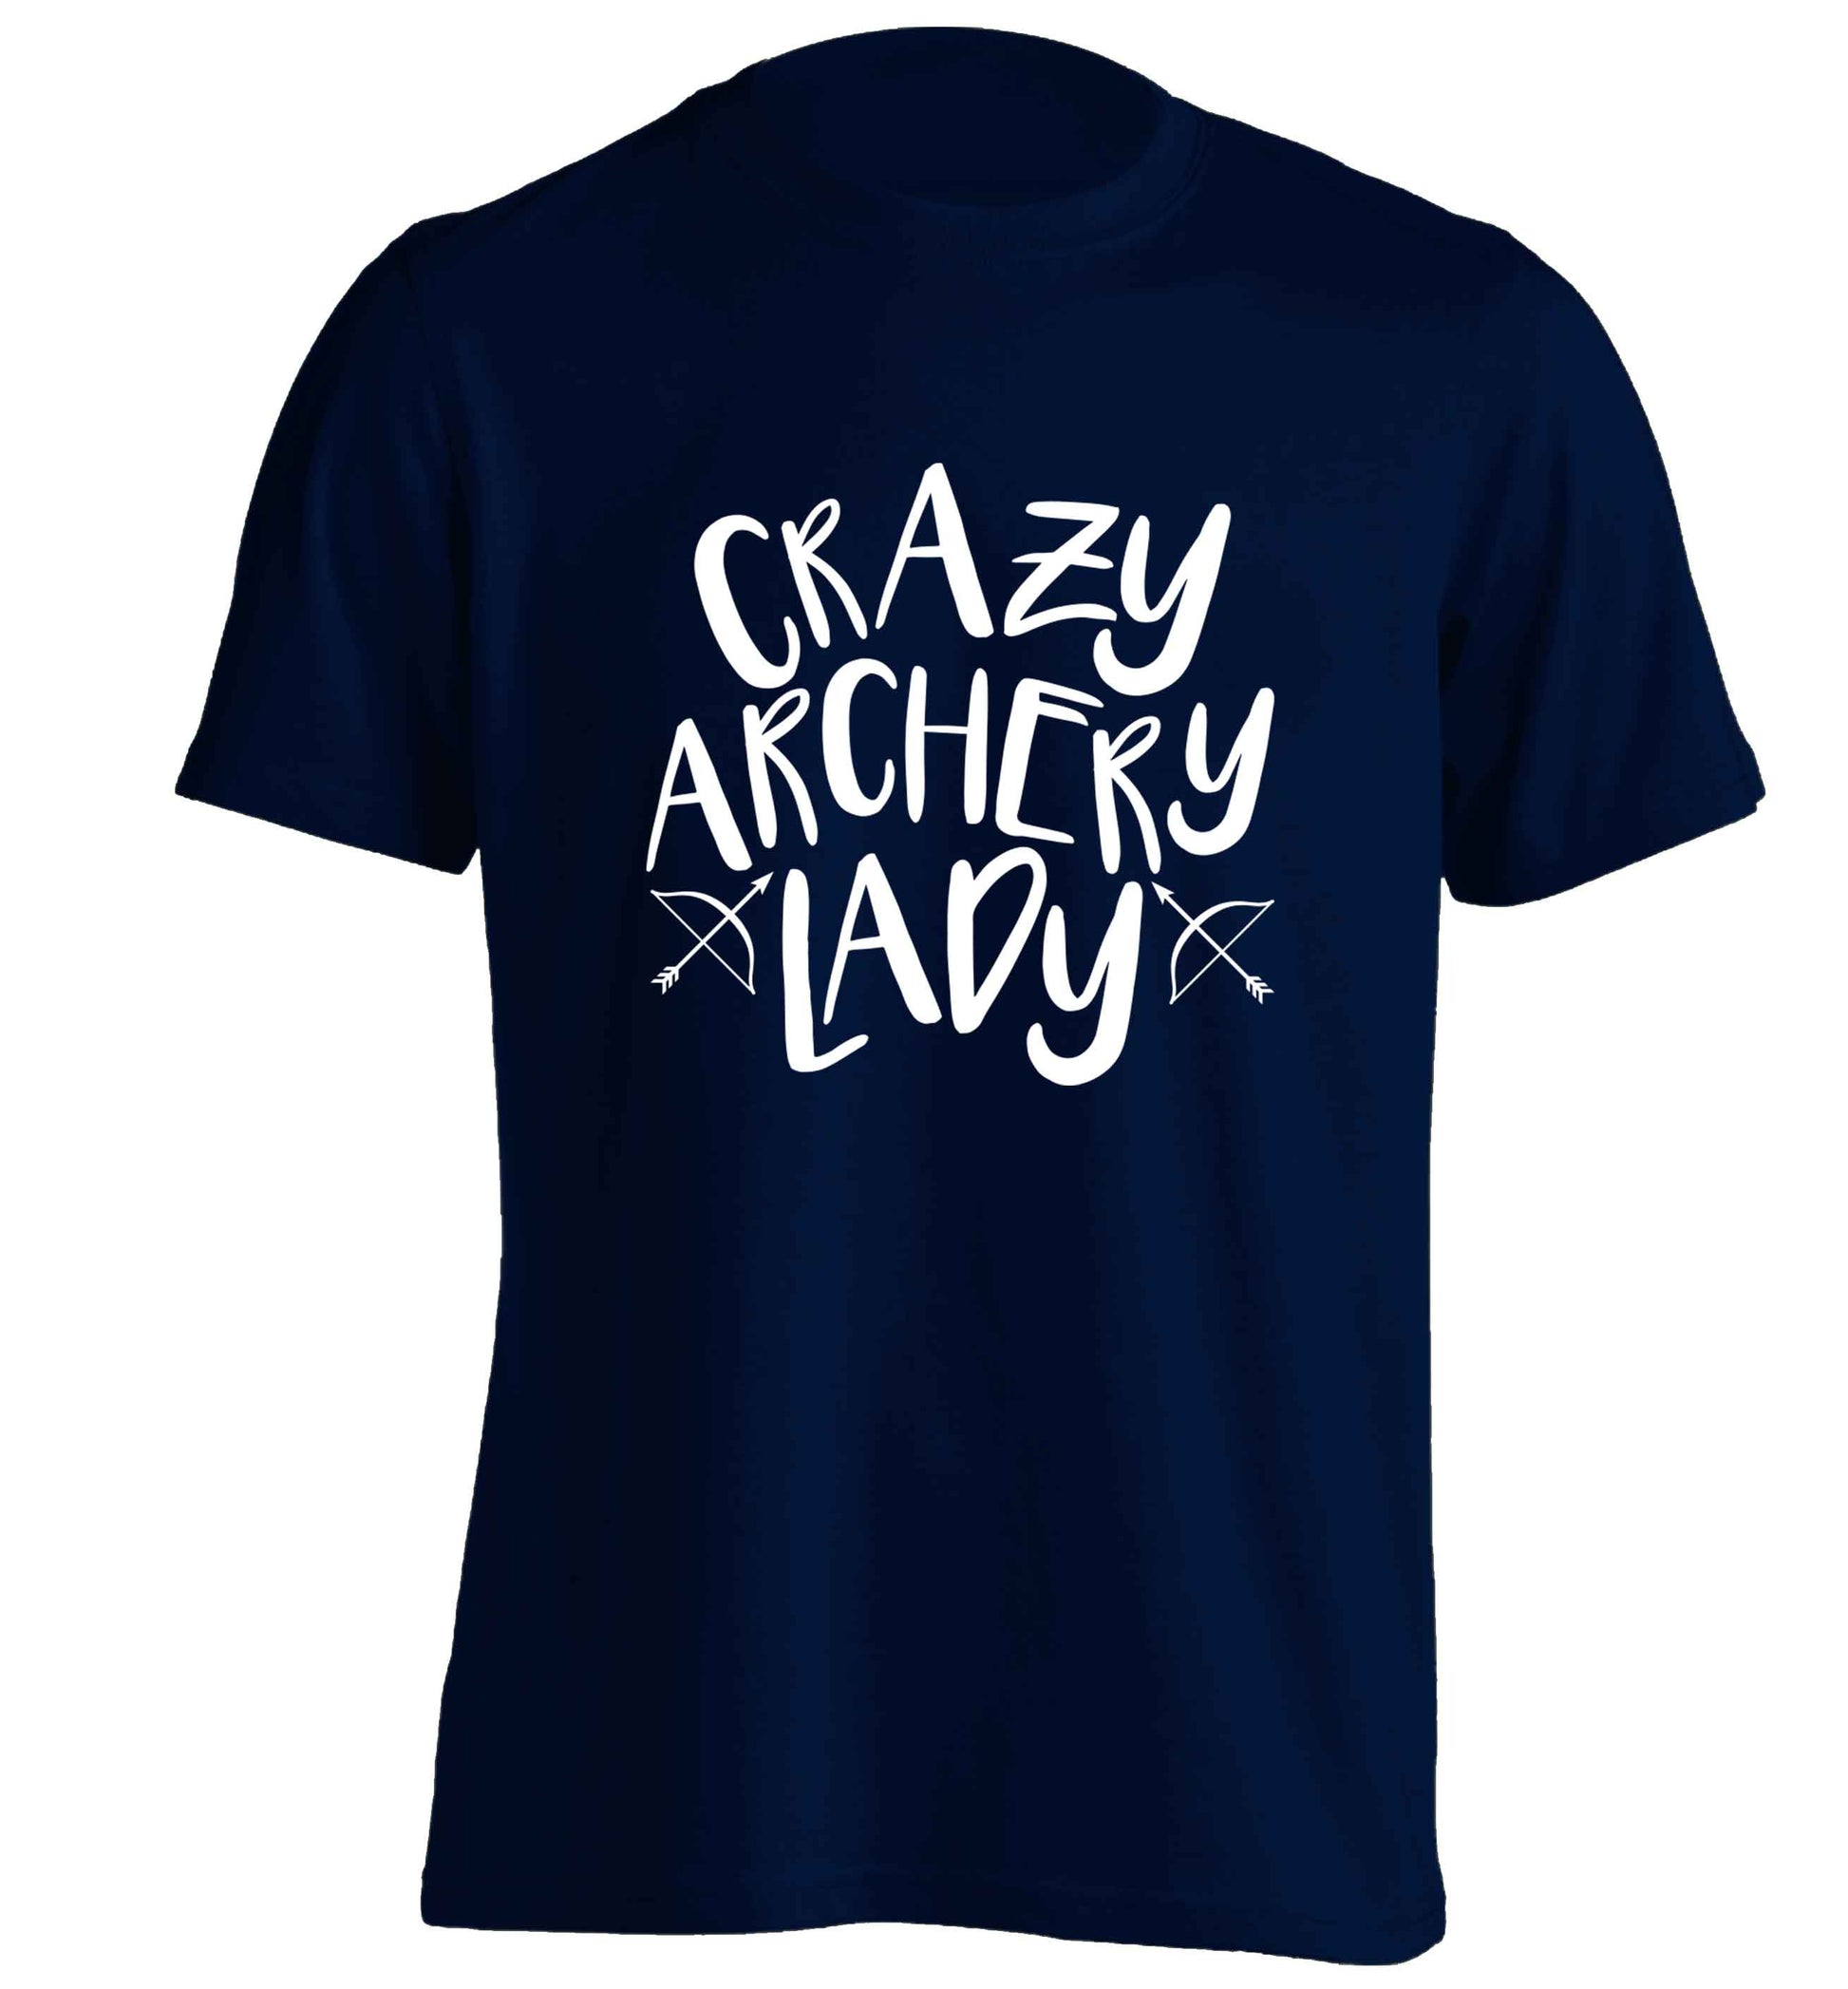 Crazy archery lady adults unisex navy Tshirt 2XL